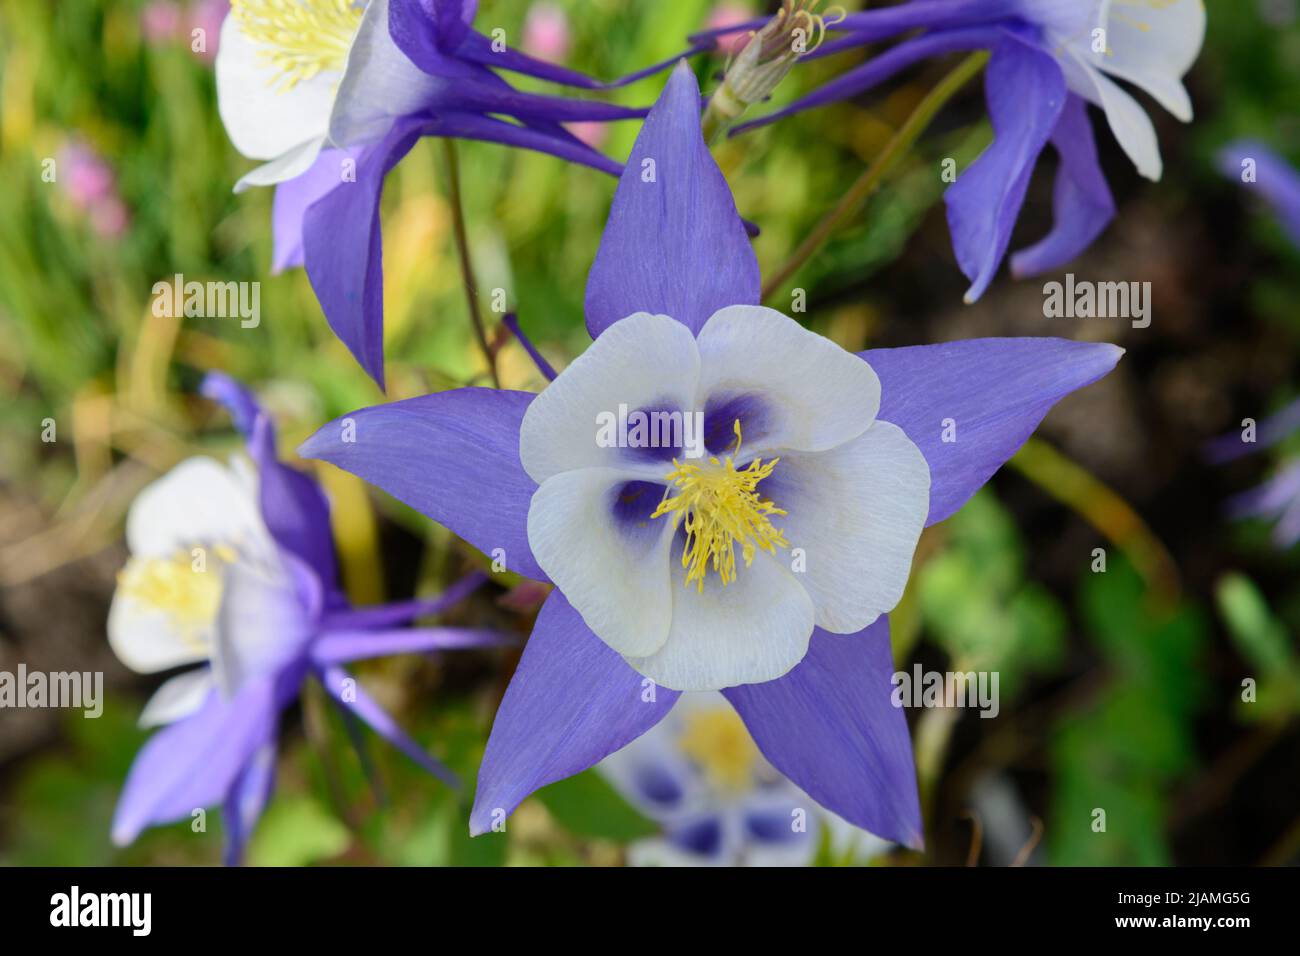 Colorado blue columbine or Rocky Mountain columbine (Aquilegia coerulea or Aquilegia caerulea), a blue and white herbaceous perennial Stock Photo